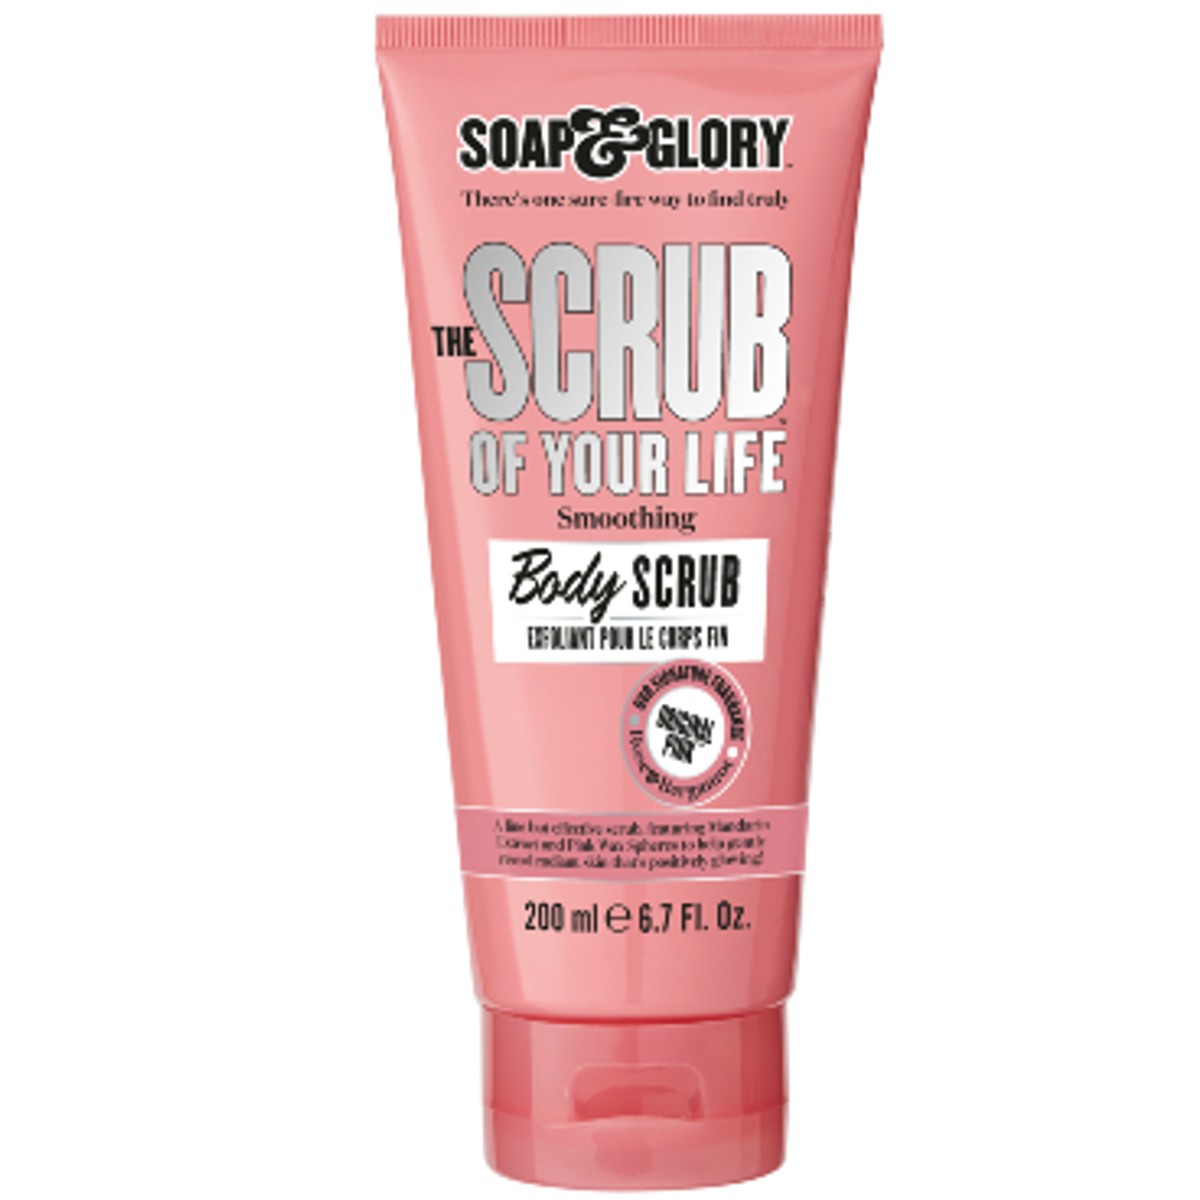 Original Pink The Scrub Of Your Life Exfoliating Body Scrub